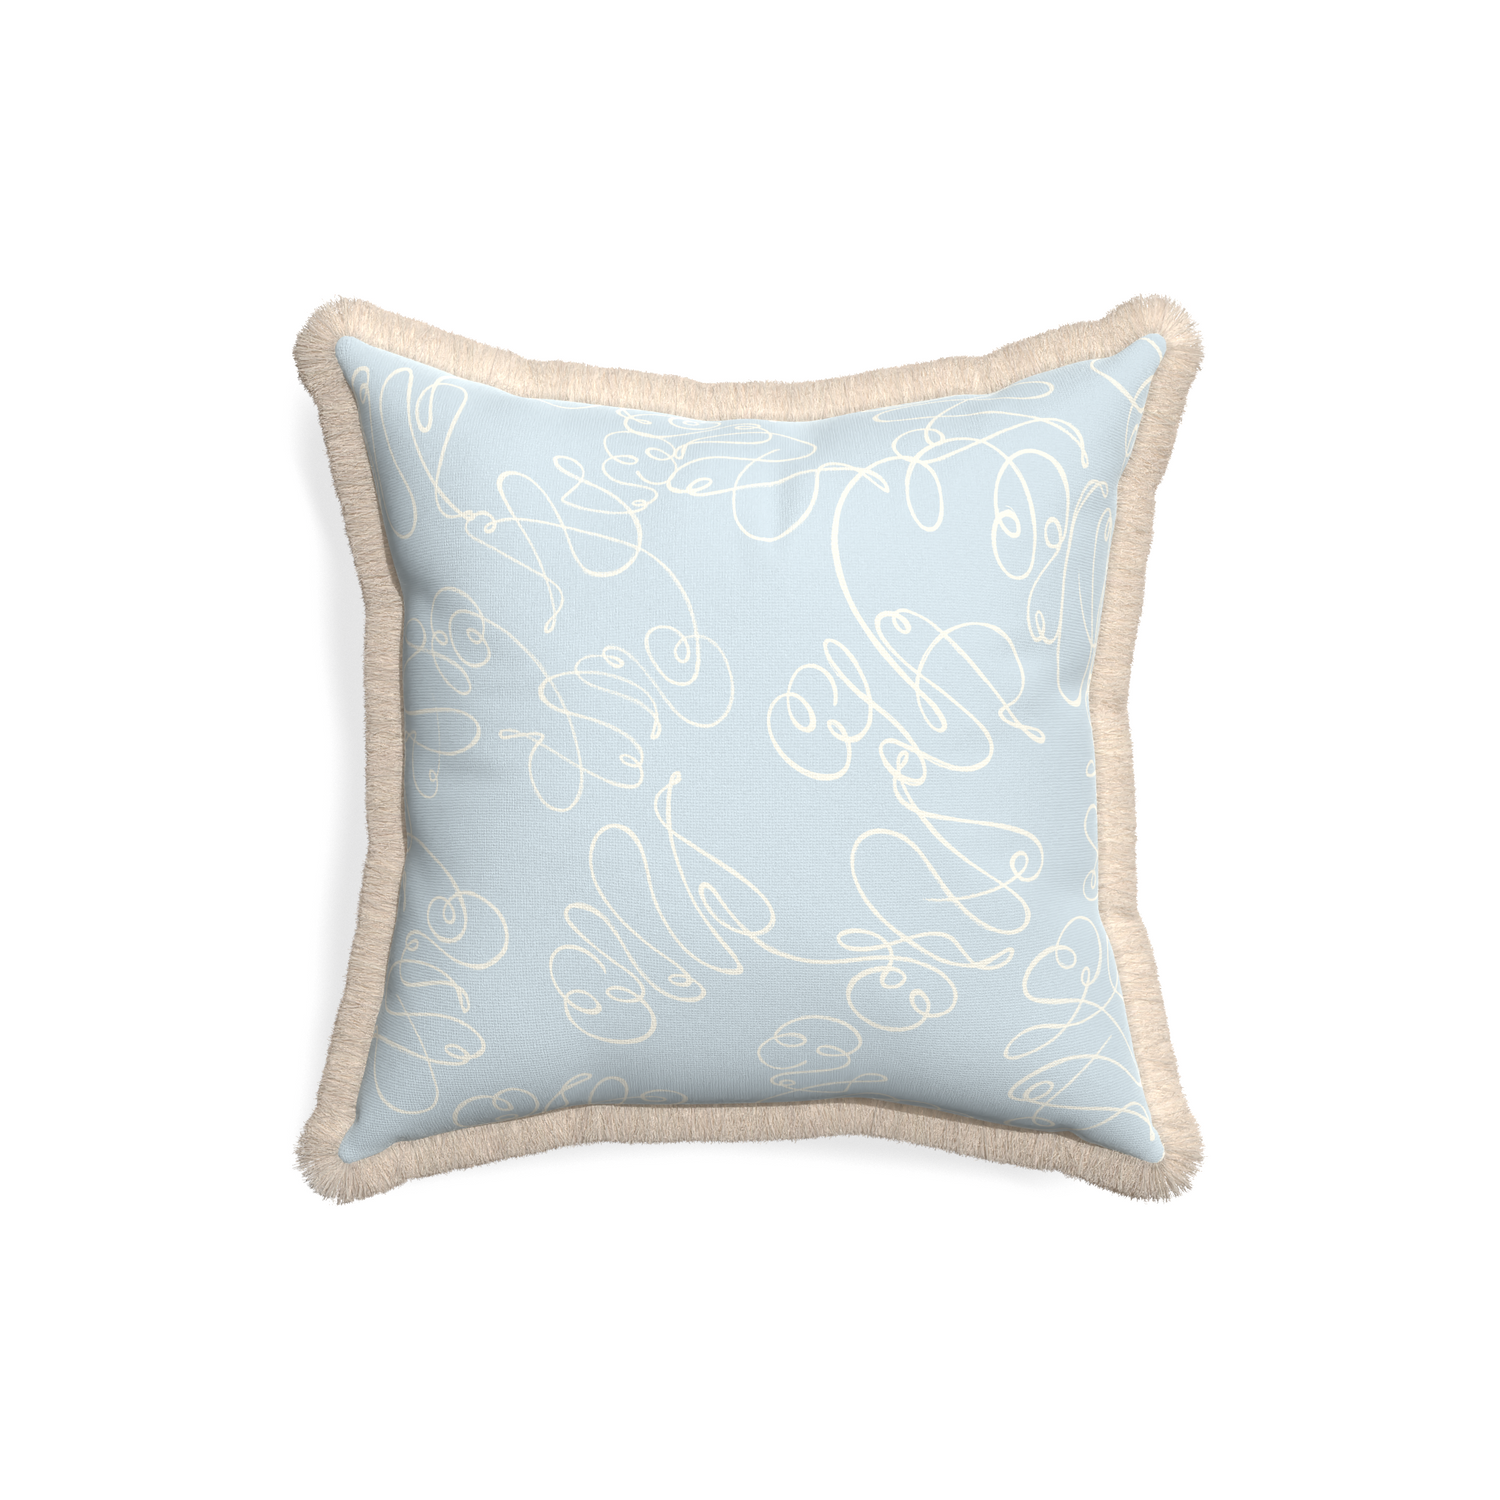 18-square mirabella custom pillow with cream fringe on white background